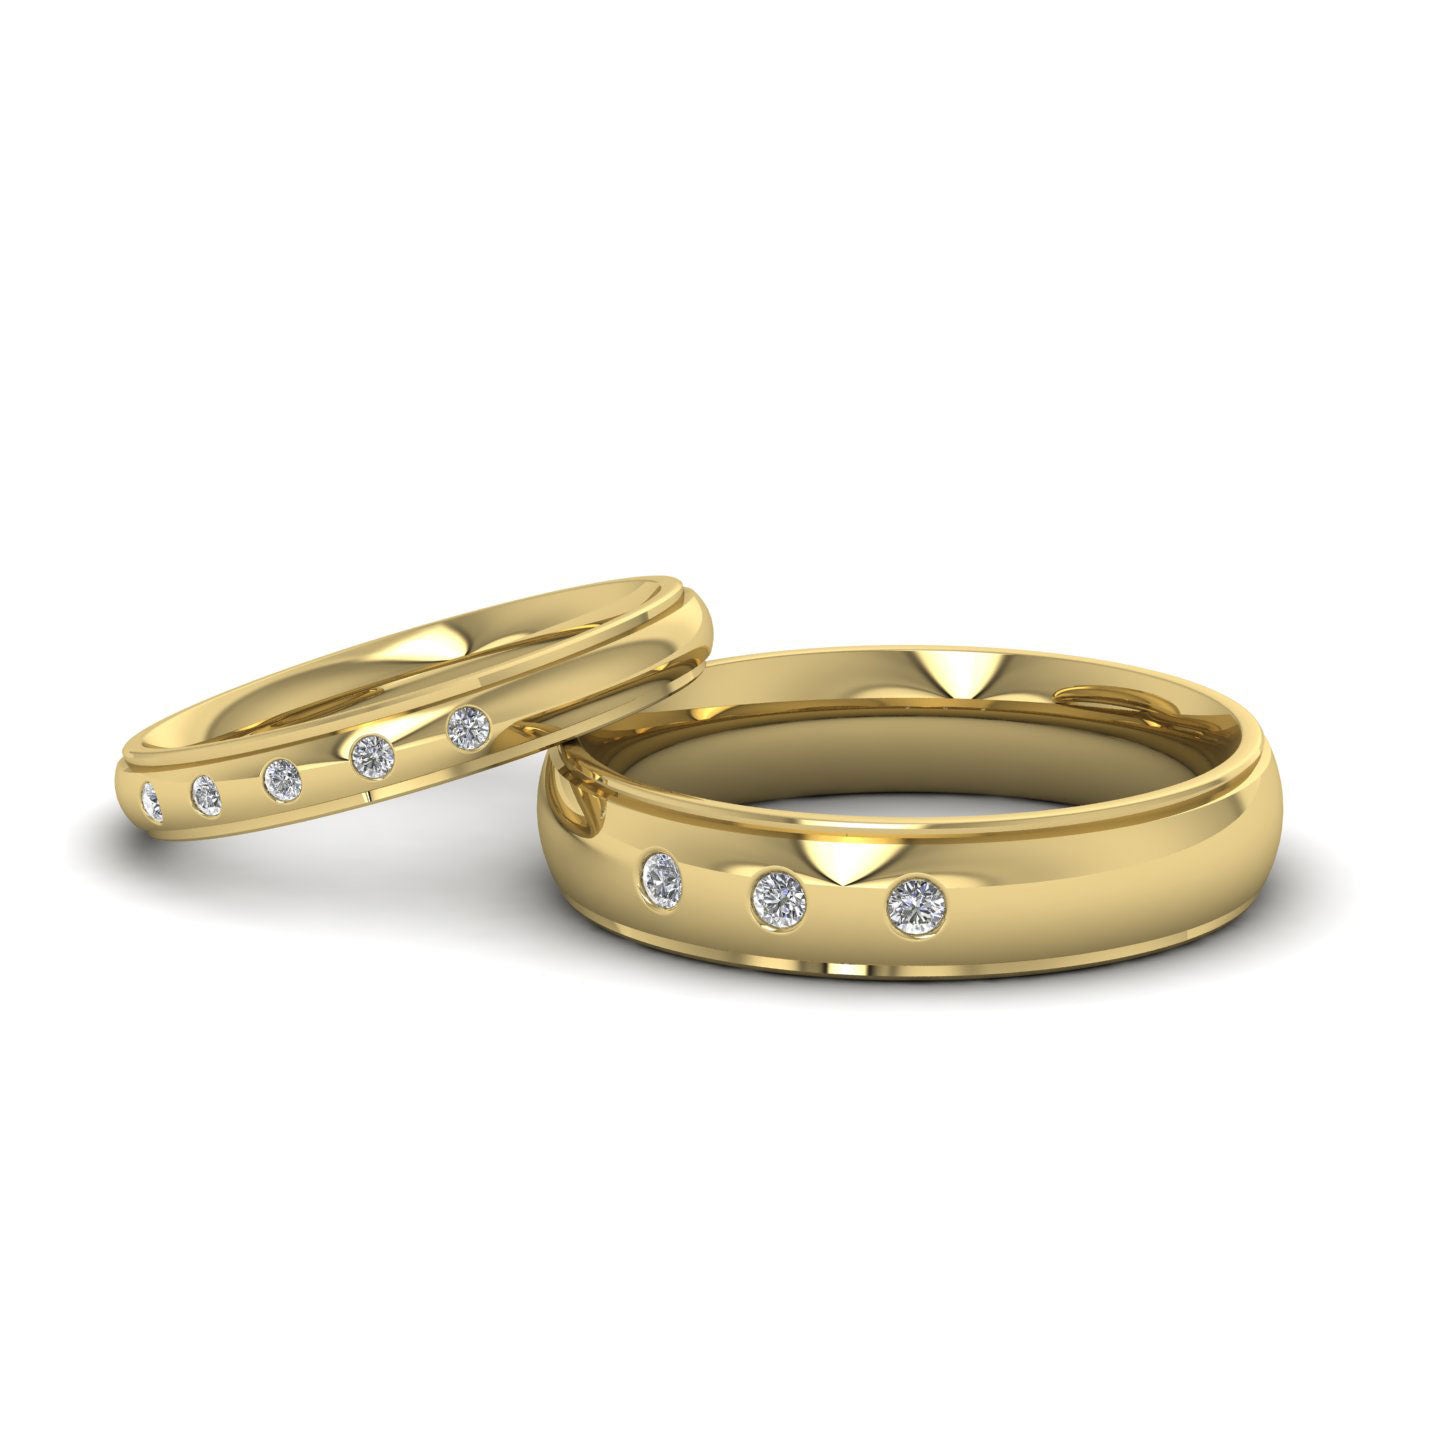 Line Pattern And Three Diamond Set 18ct Yellow Gold 5mm Wedding Ring